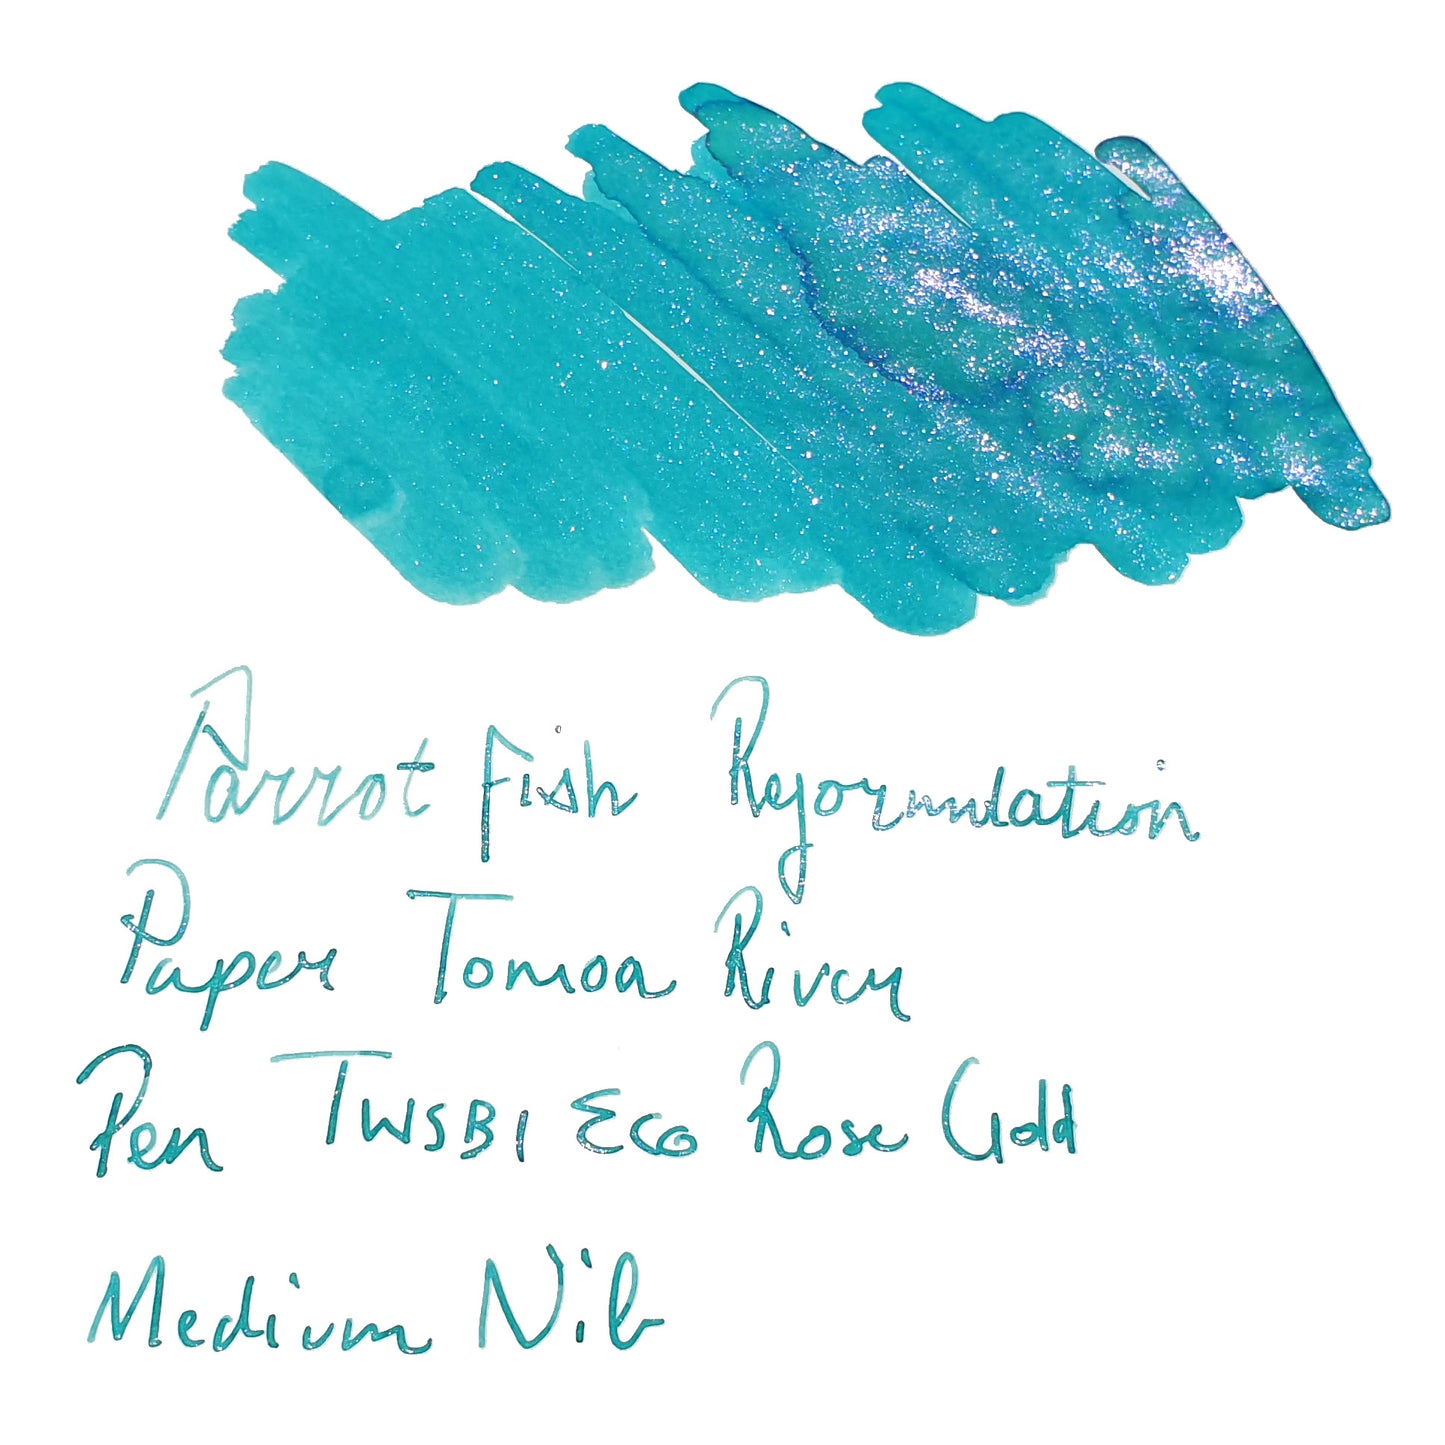 Van Dieman's Underwater - Parrot Fish - Shimmer Ink